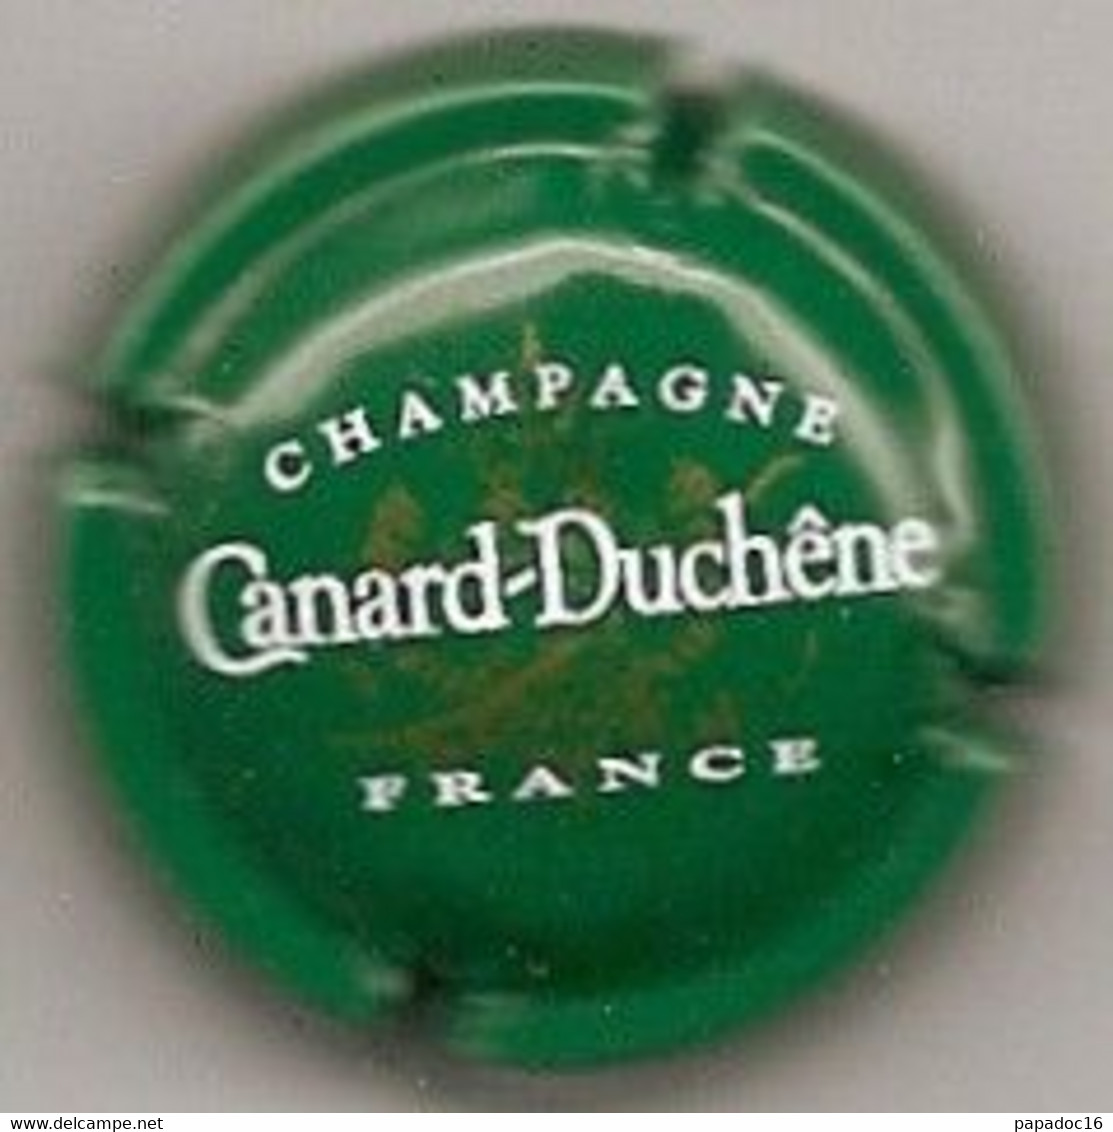 Capsule De Muselet - Champagne Canard-Duchêne - France [blanc Sur Vert] (brut Blanc) - Canard Duchêne